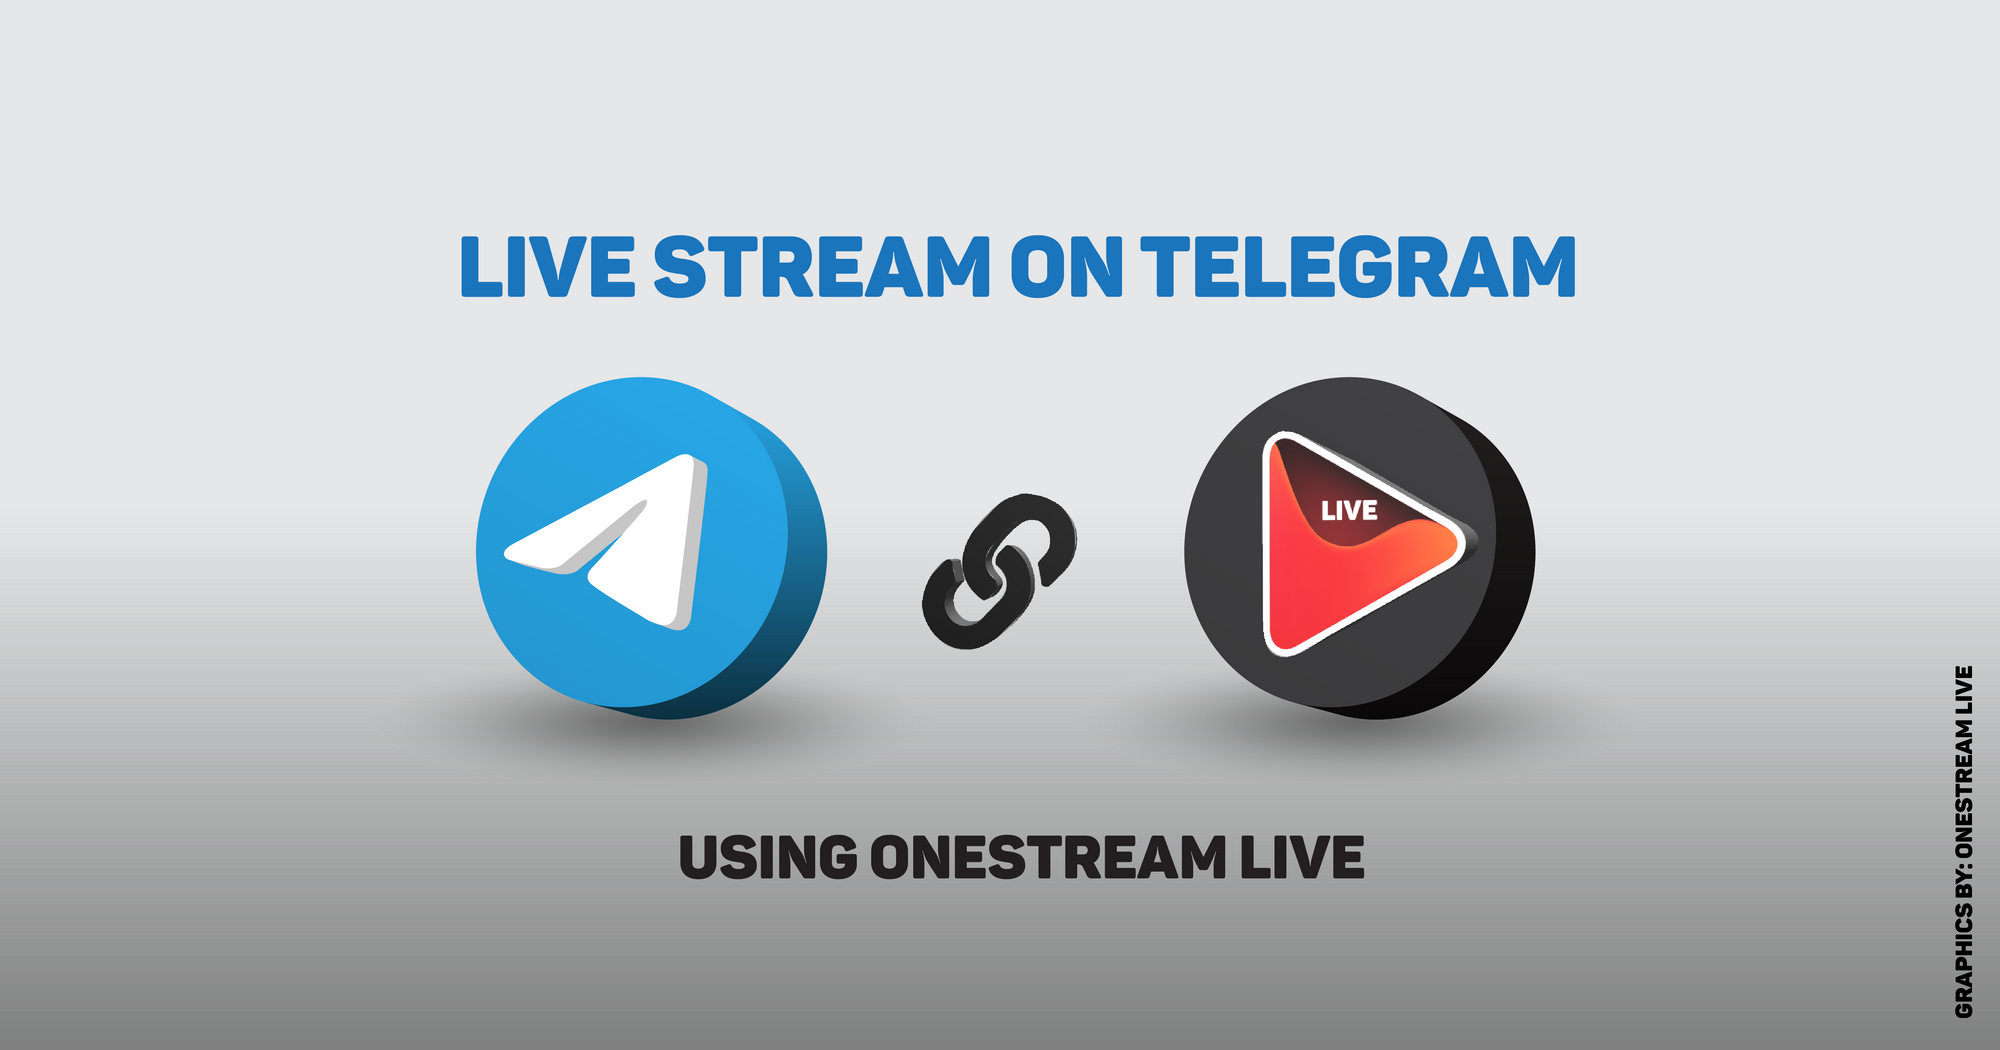 Live stream on Telegram using OneStream Live